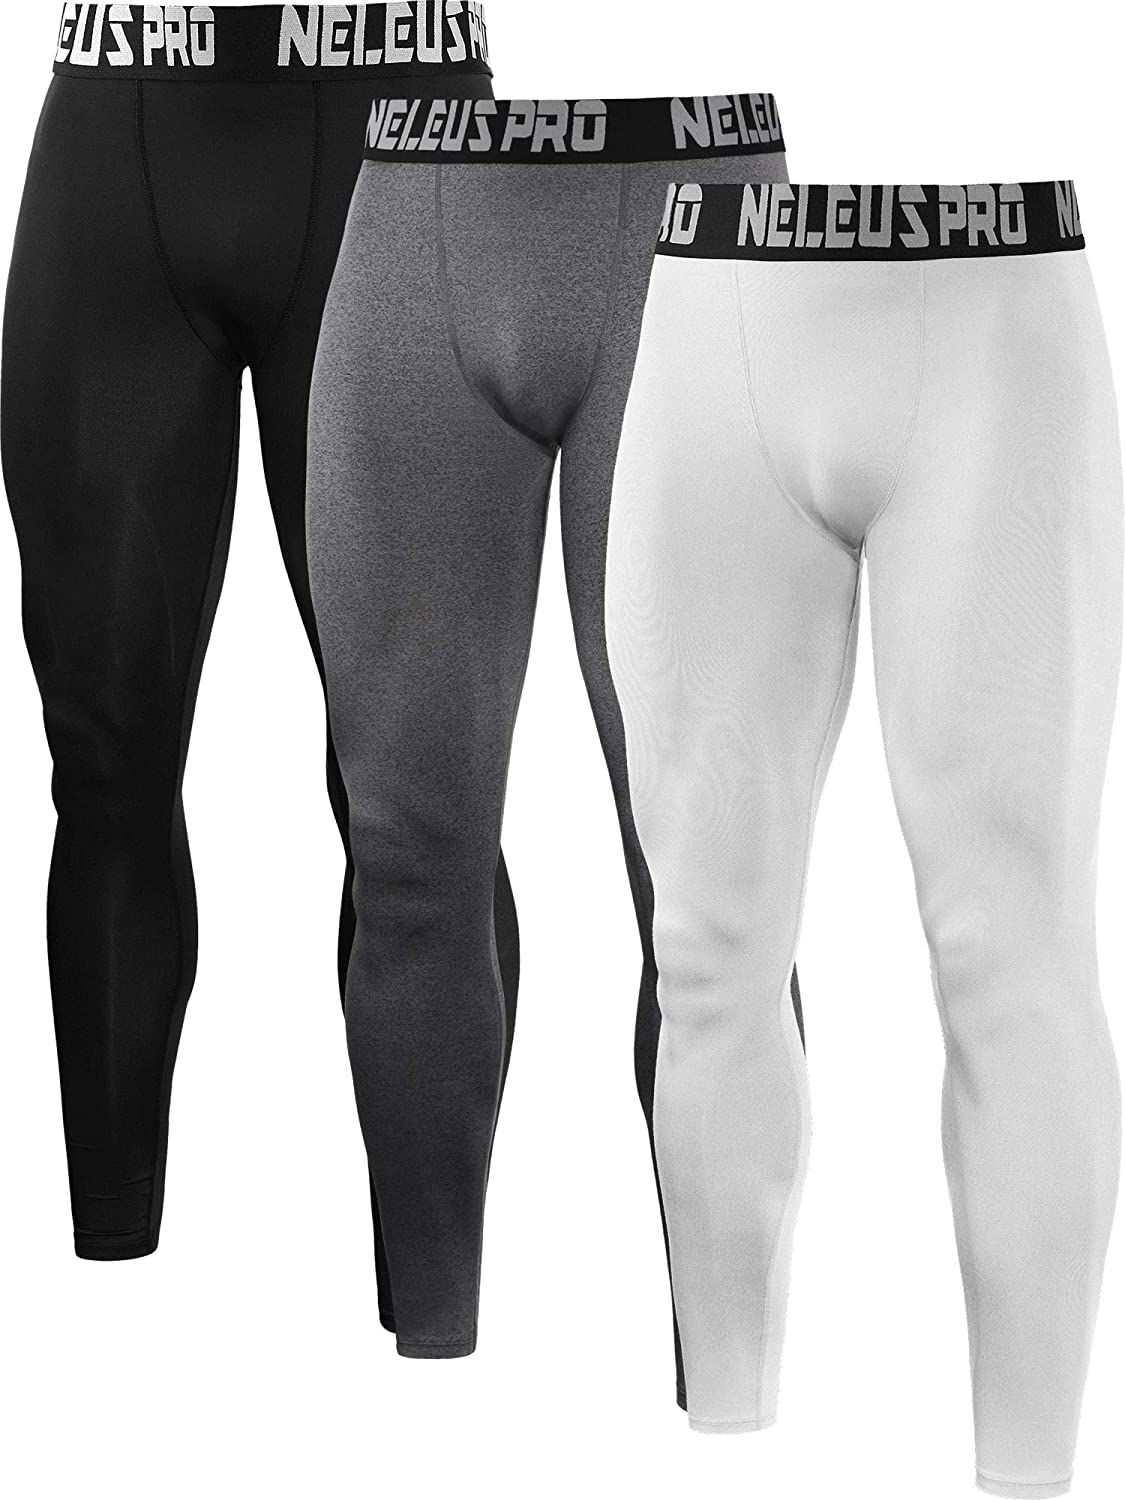  NELEUS Men's 2 Pack Dry Fit Compression Pants Running